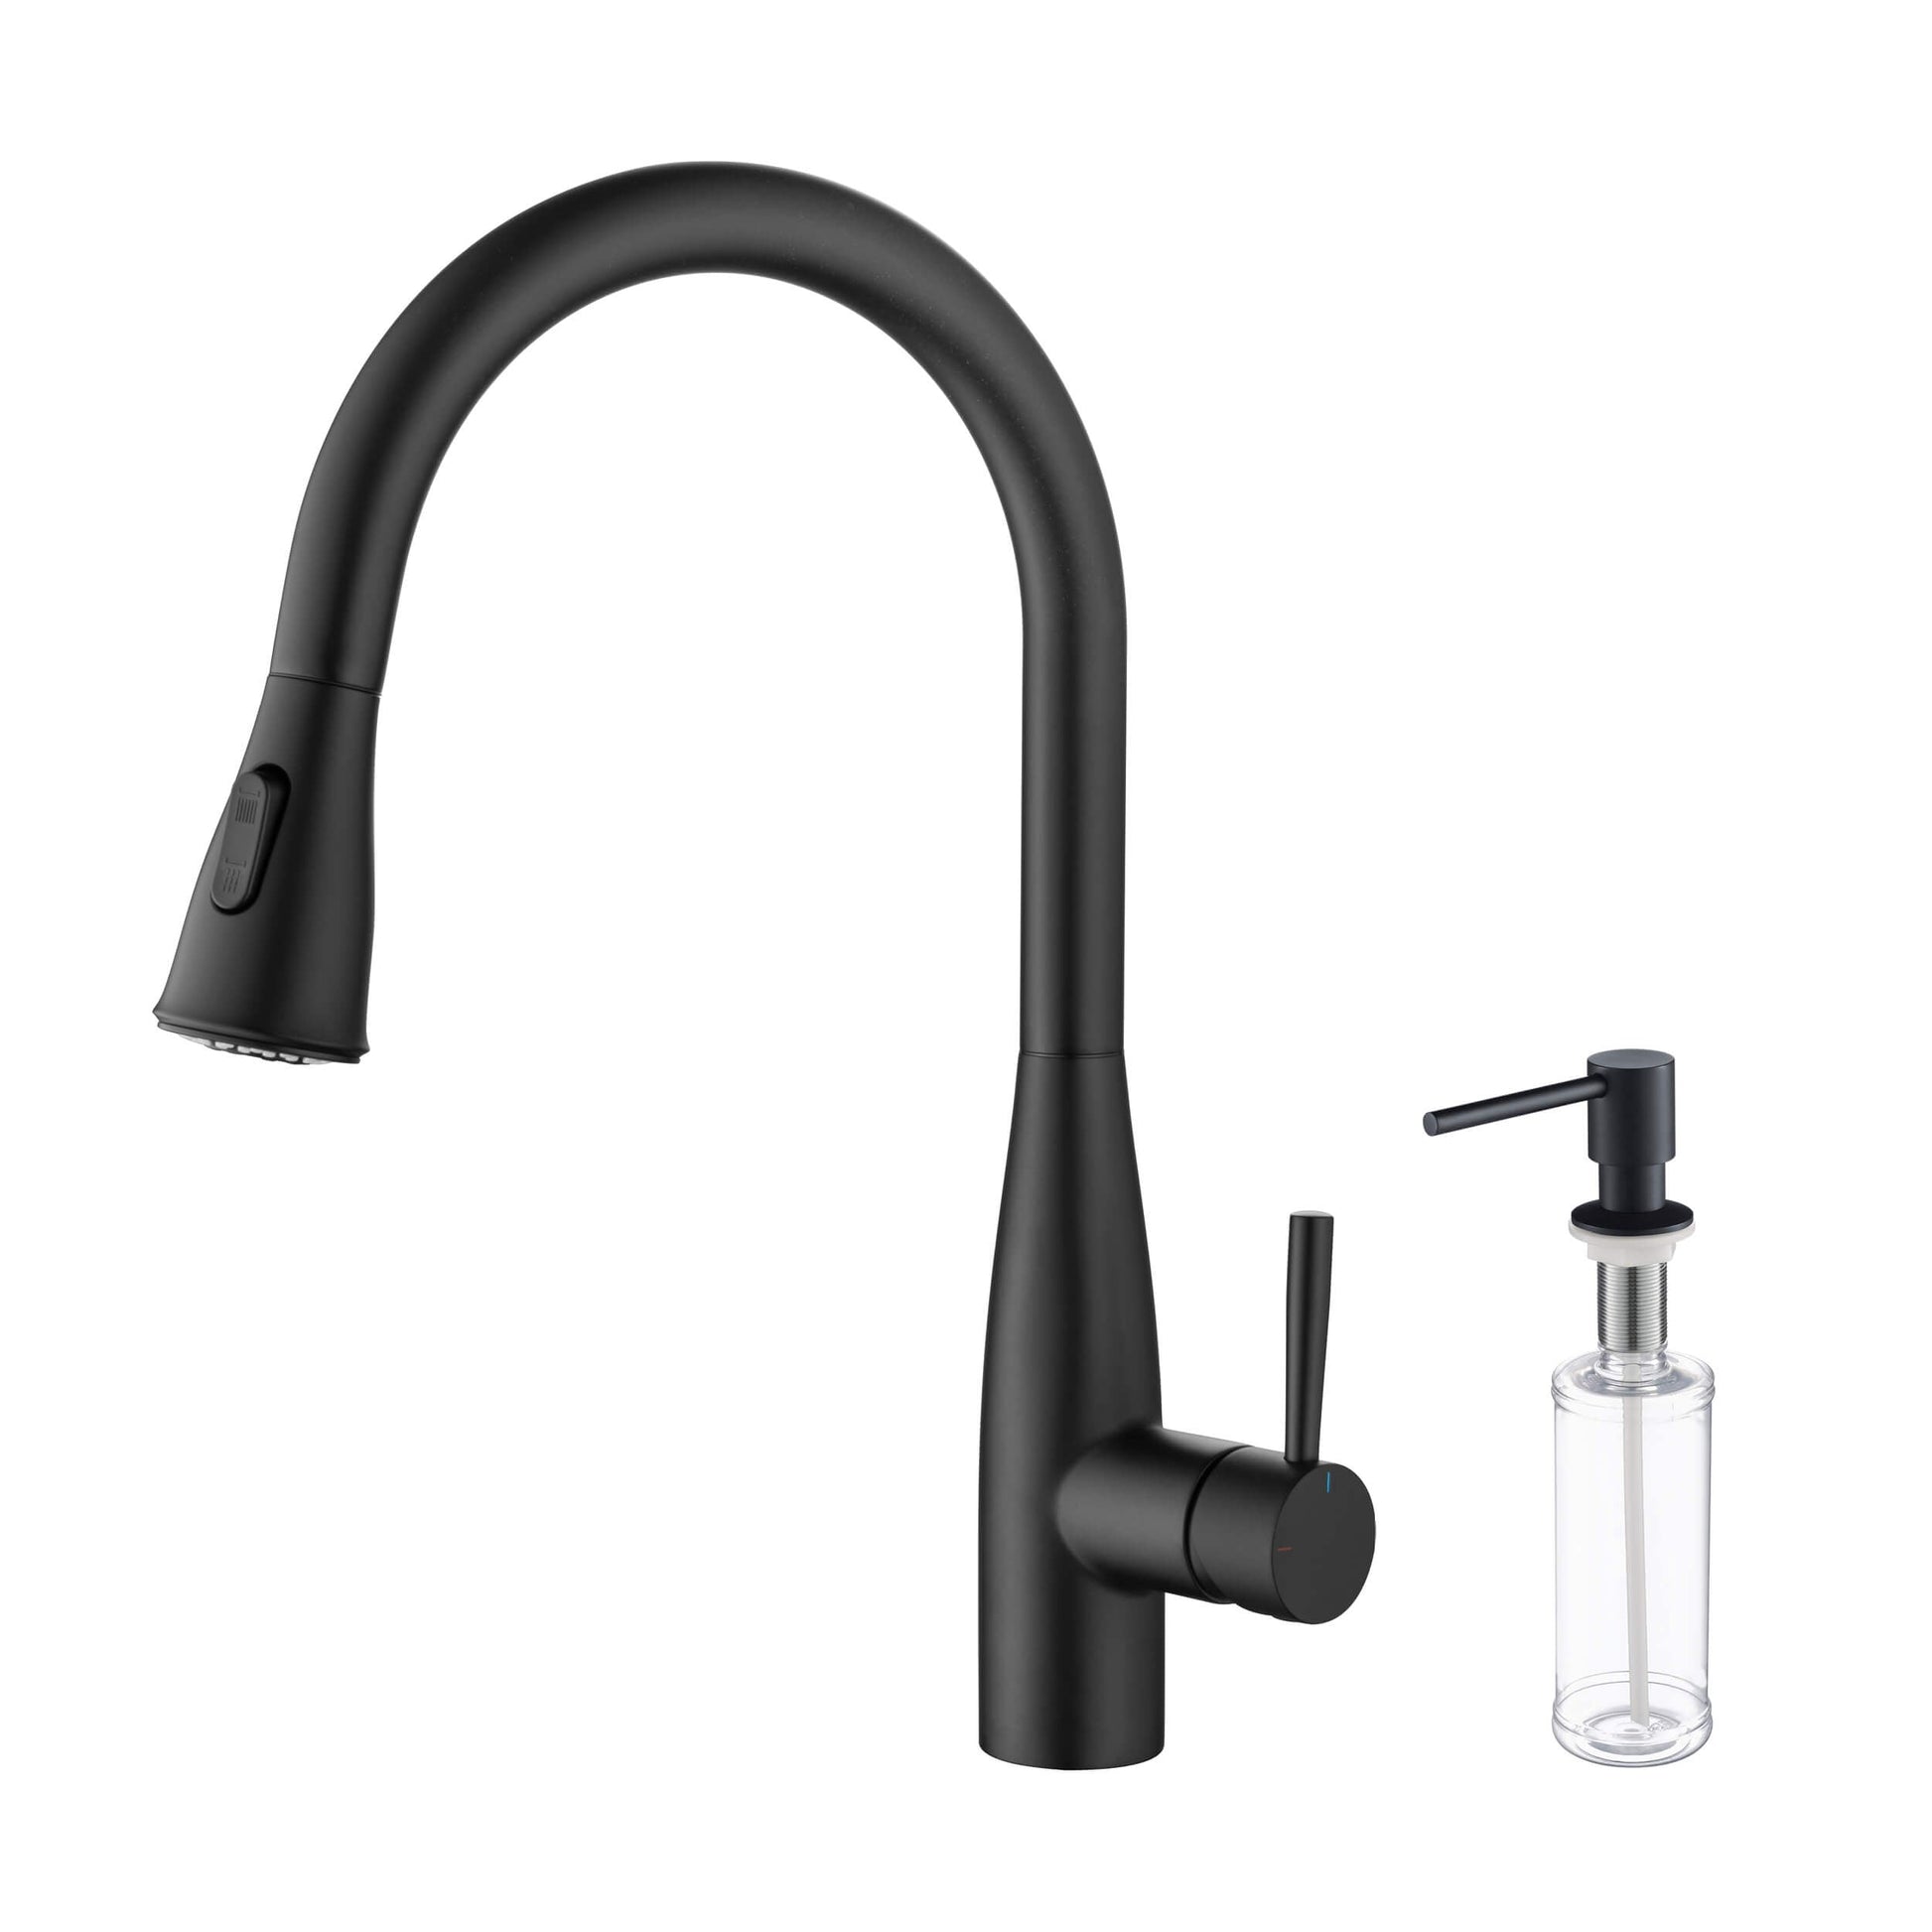 Kibi Bari-T Single Handle Pull Down Kitchen Sink Faucet With Soap Dispenser in Matte Black Finish